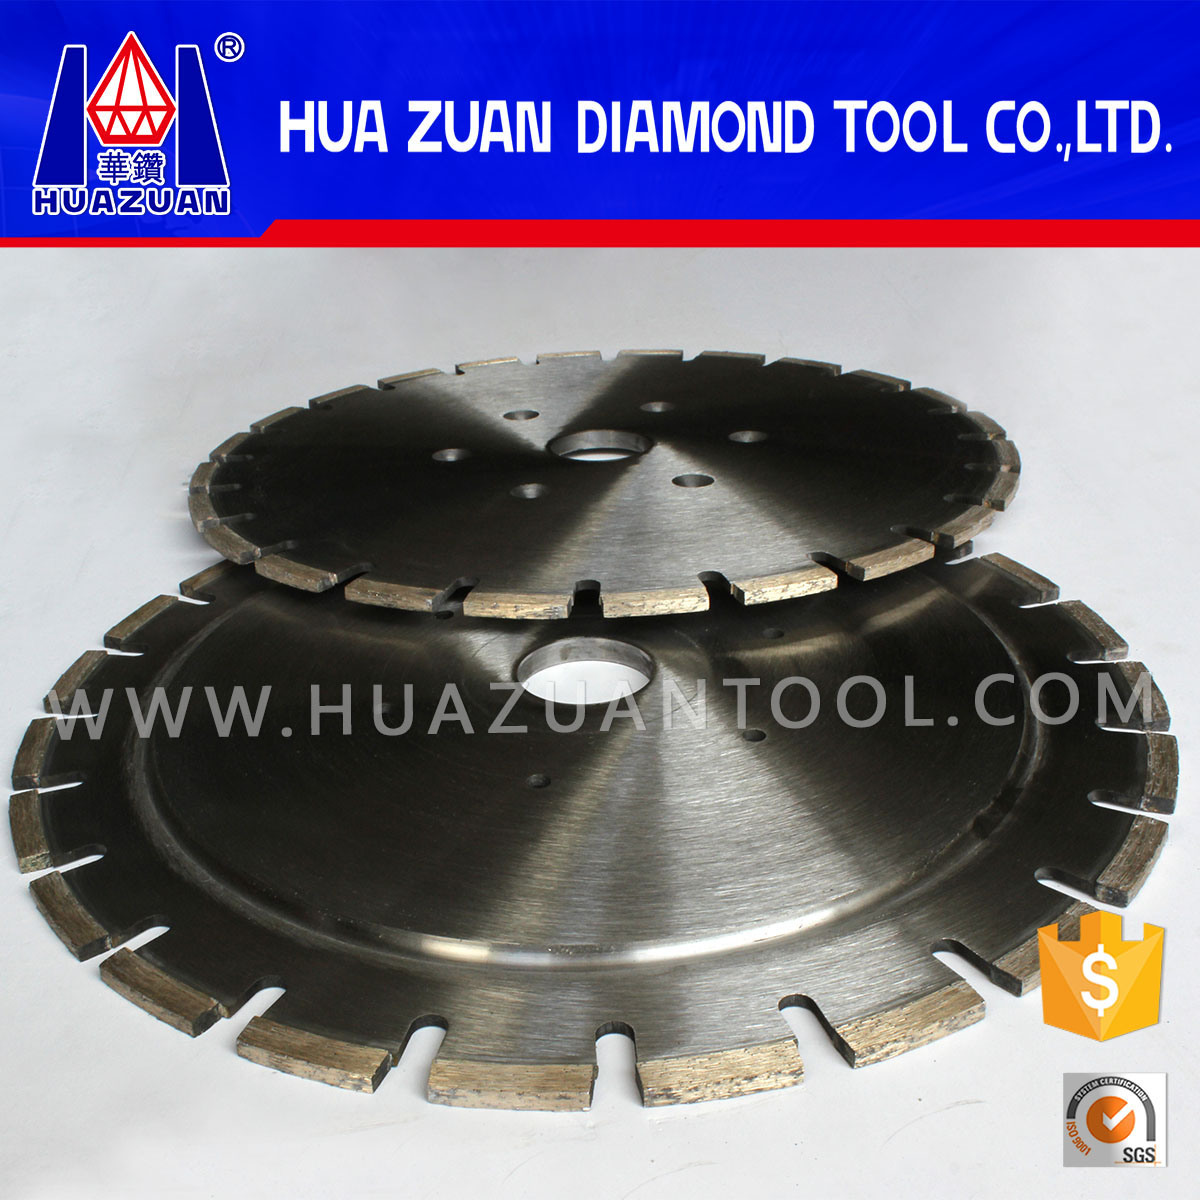 Huazuan Good Quality 400mm Horizontal Cutting Discs for Marble Cutting